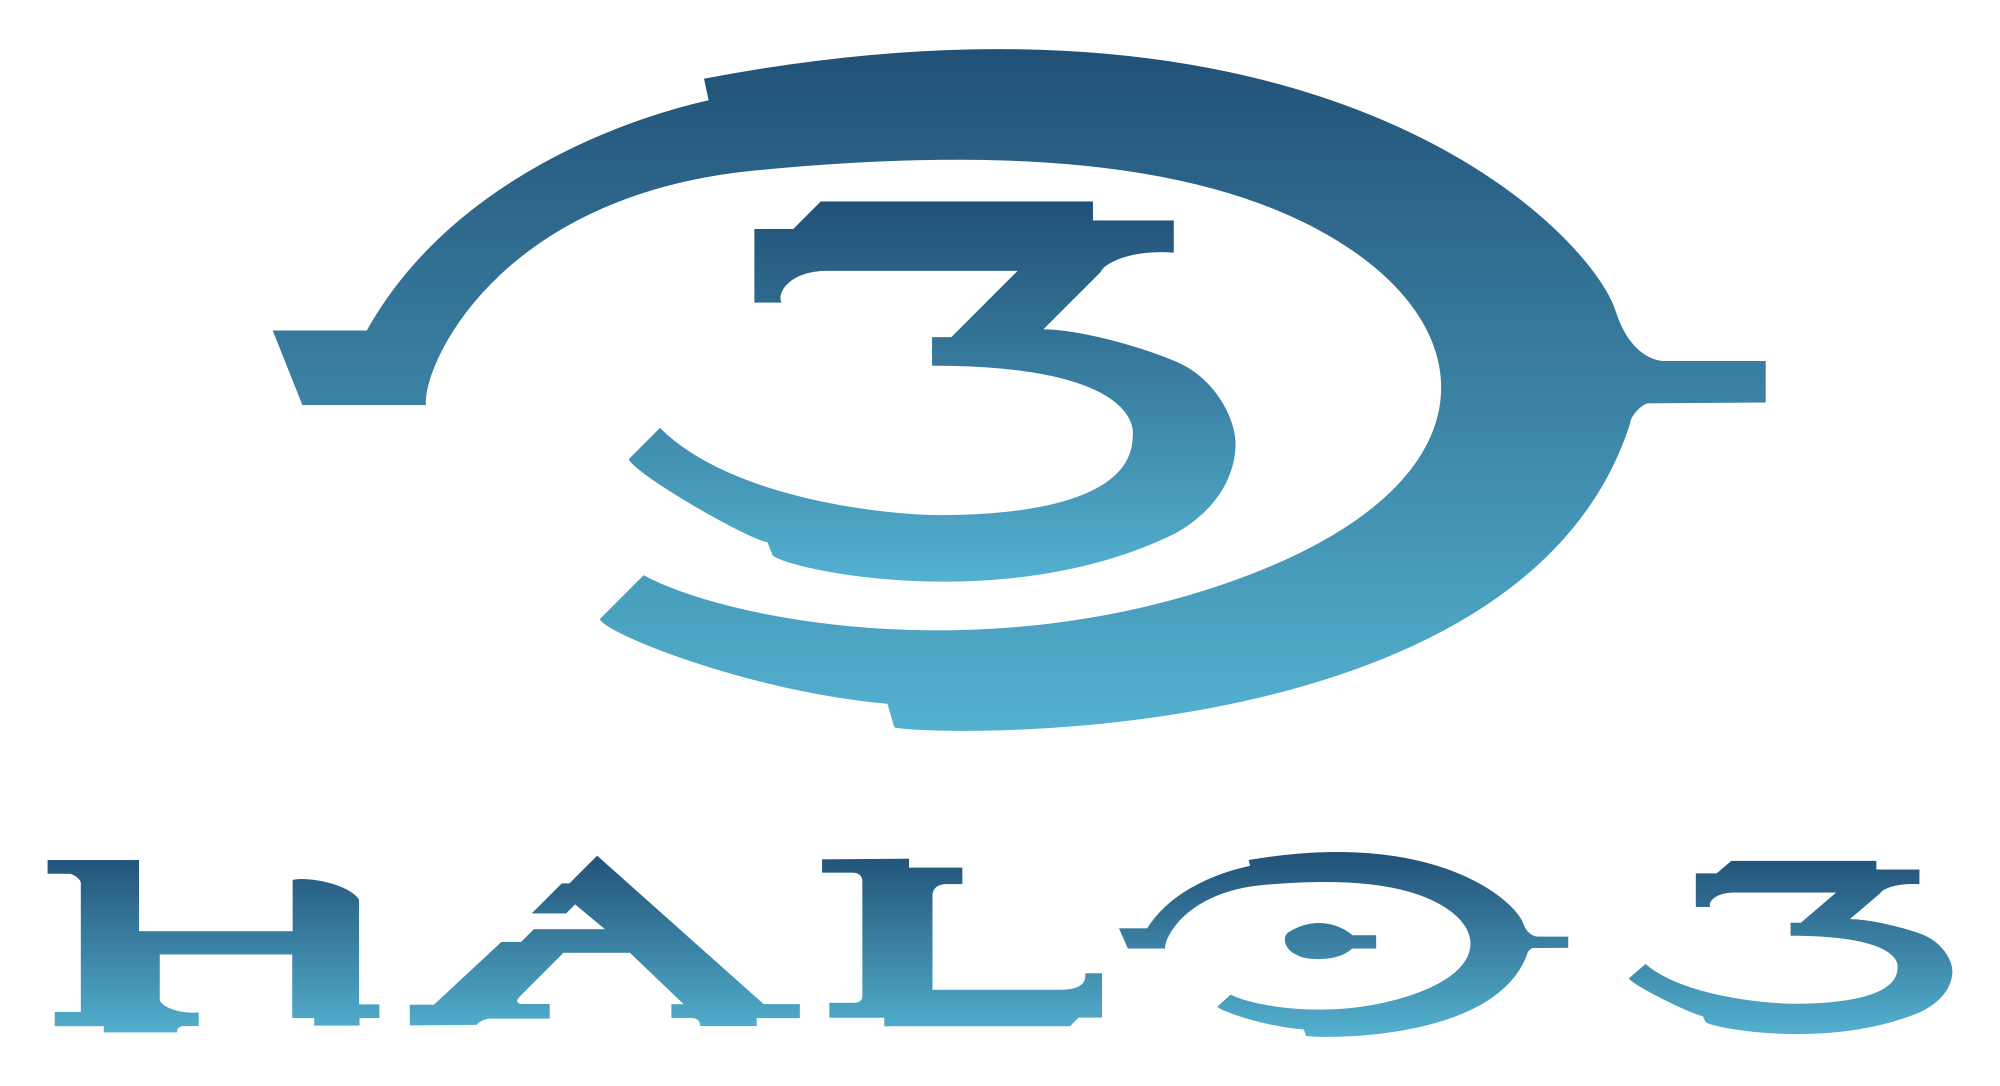 halo-3-logo-png-11.png